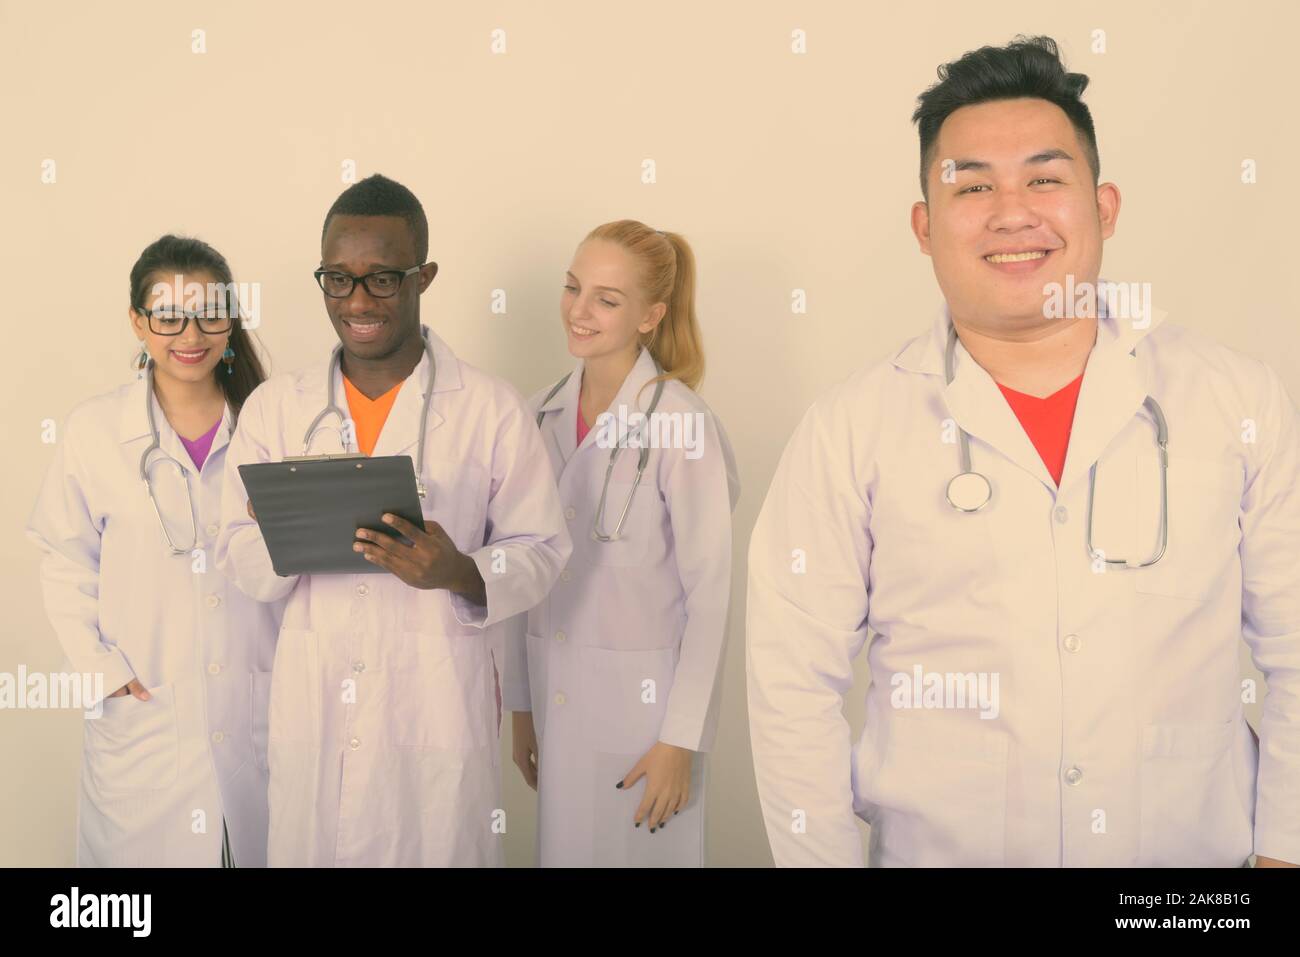 Divers groupes ethniques de happy doctors working together Banque D'Images